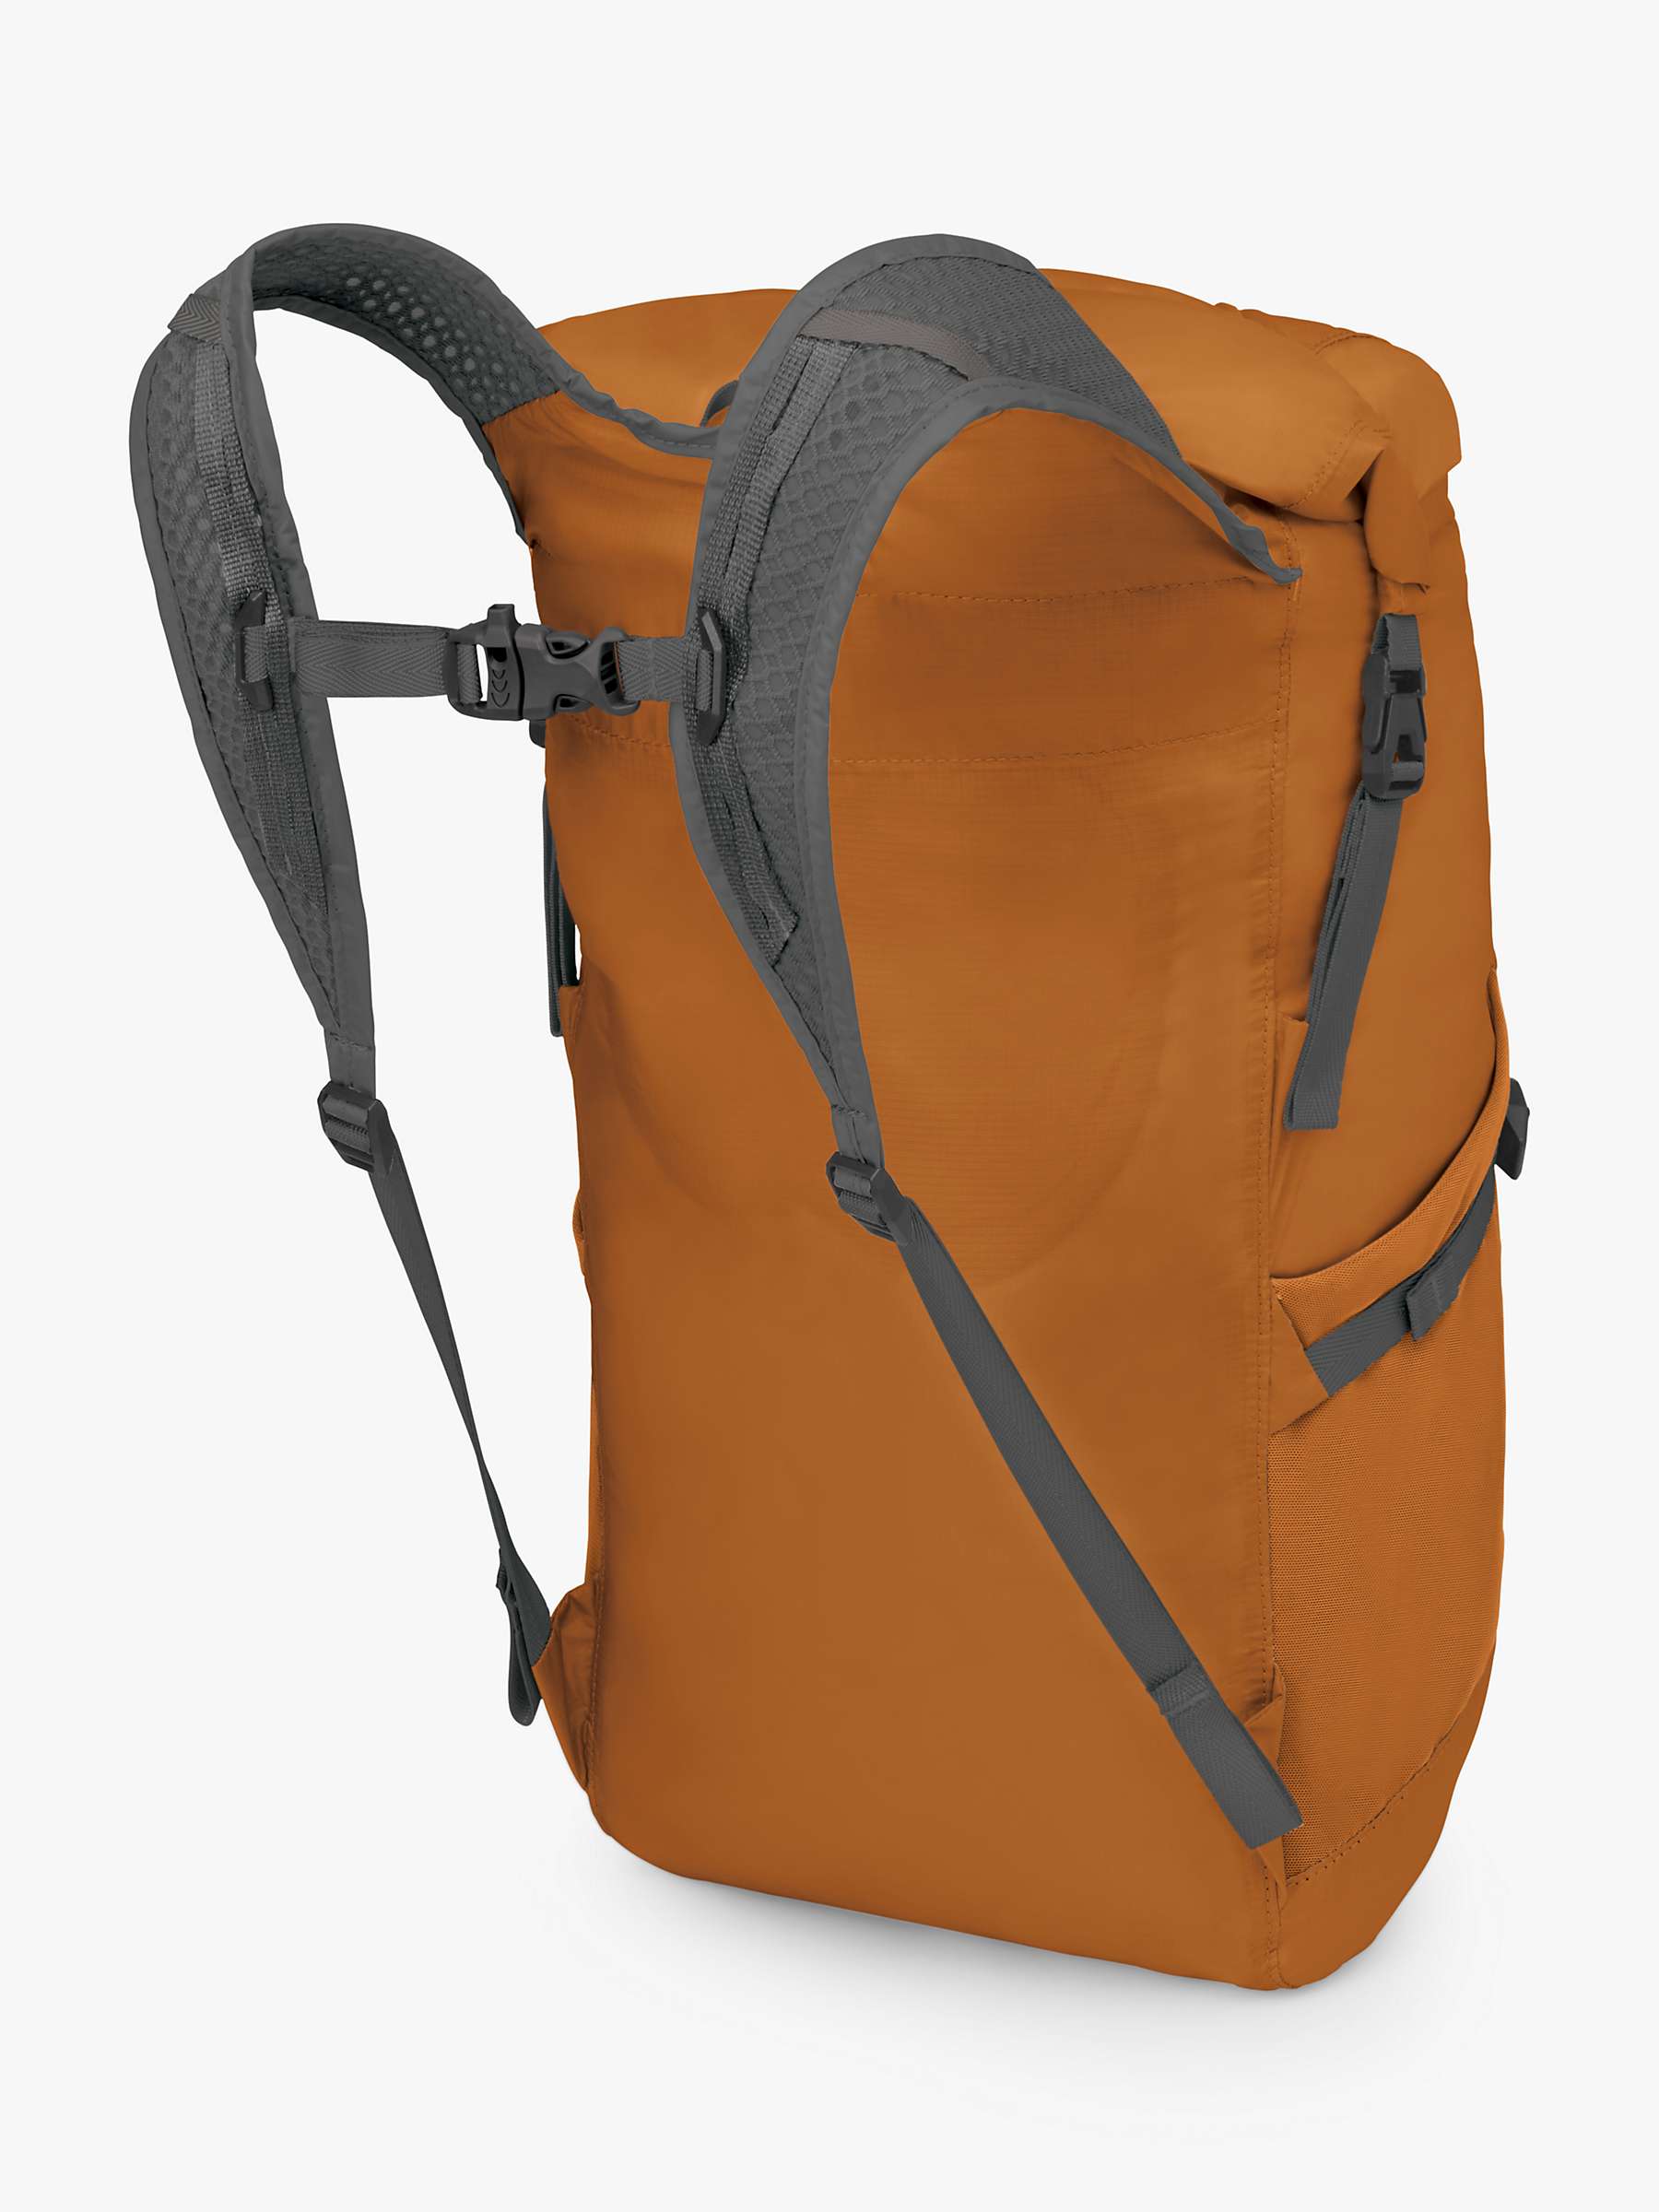 Buy Osprey Ultralight Dry Stuff 20 Backpack Online at johnlewis.com